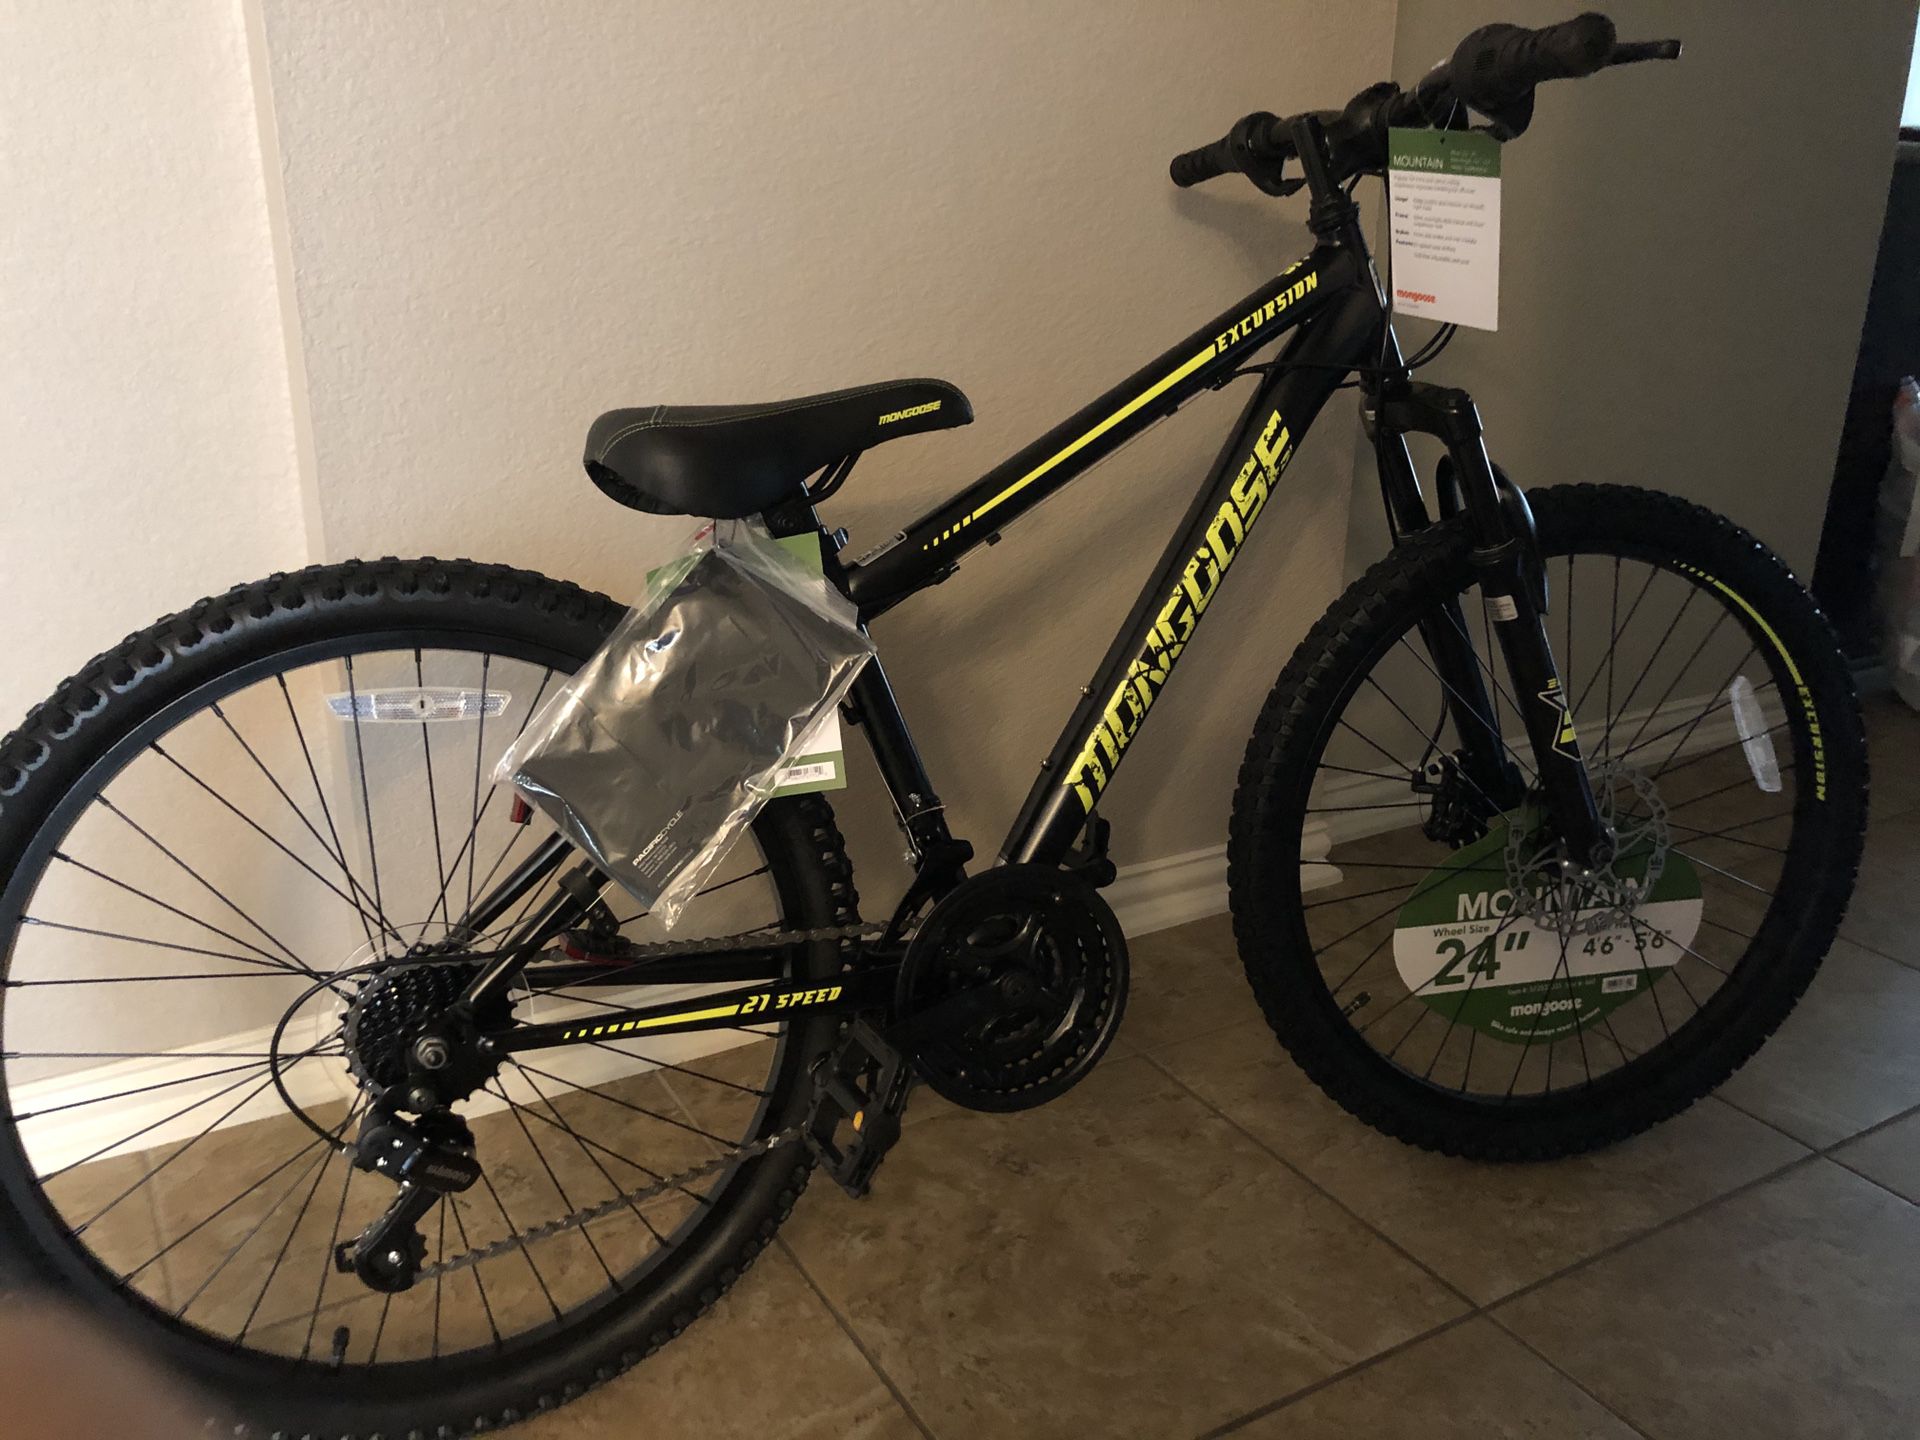 New 24 inch Mongoose bike